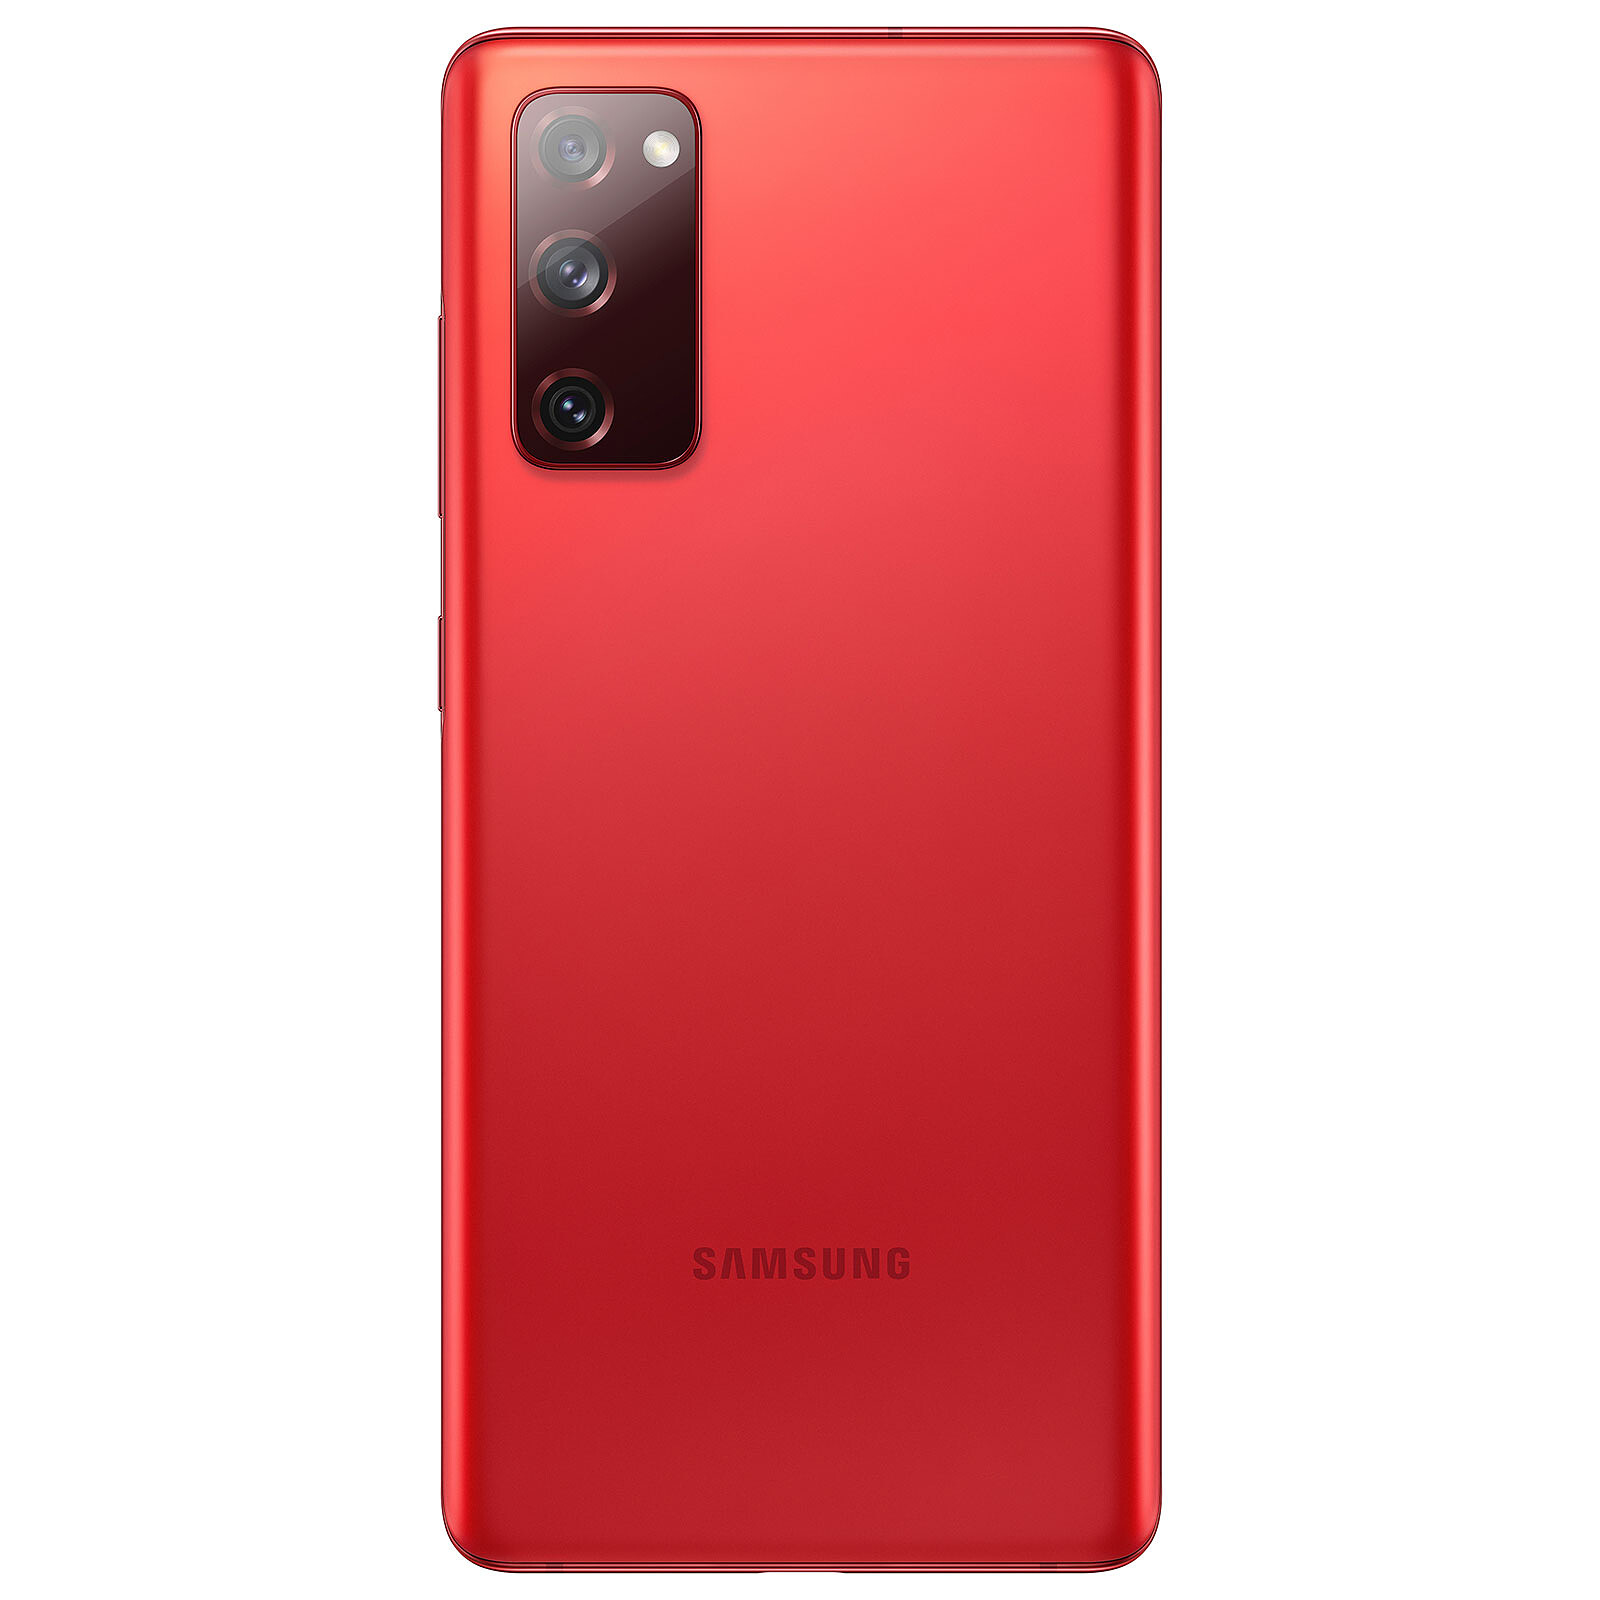 Samsung Galaxy S20 FE Fan Edition SM-G780F Rouge (6 Go / 128 Go) ·  Reconditionné - Smartphone reconditionné - LDLC